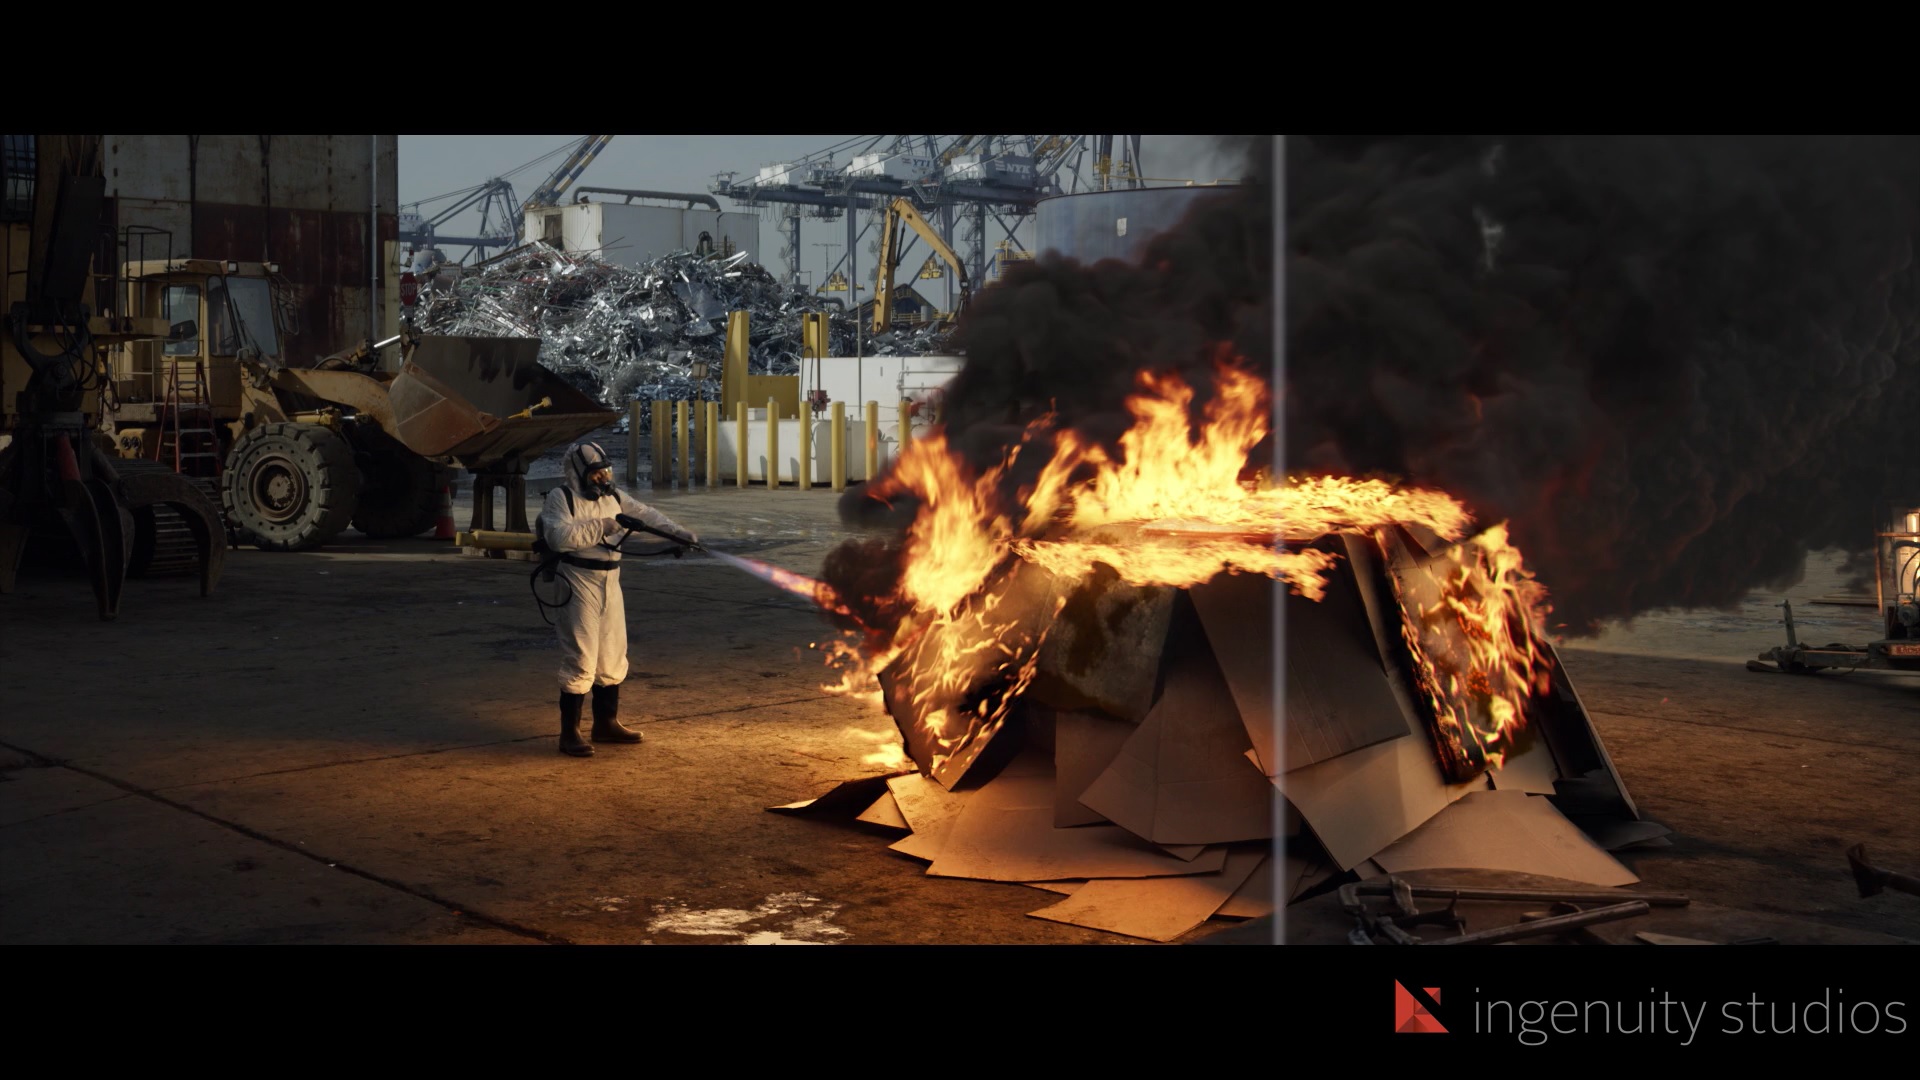 Ingenuity Studios – Fire and Explosions Breakdown